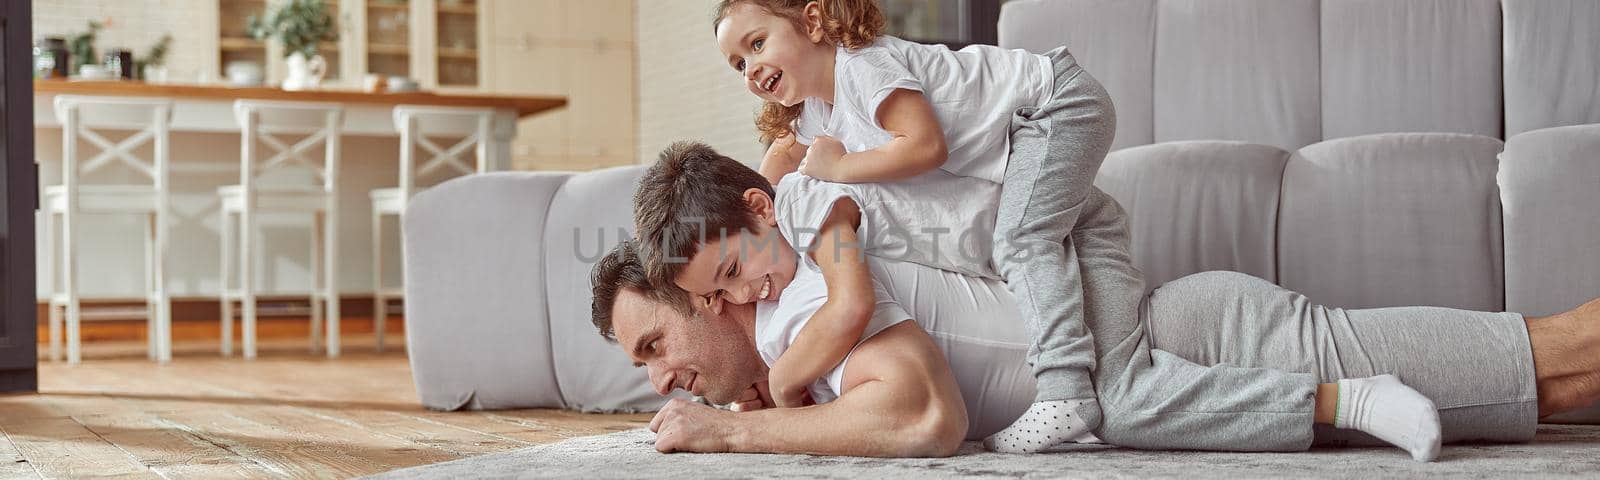 Happy family having fun together in living room by Yaroslav_astakhov